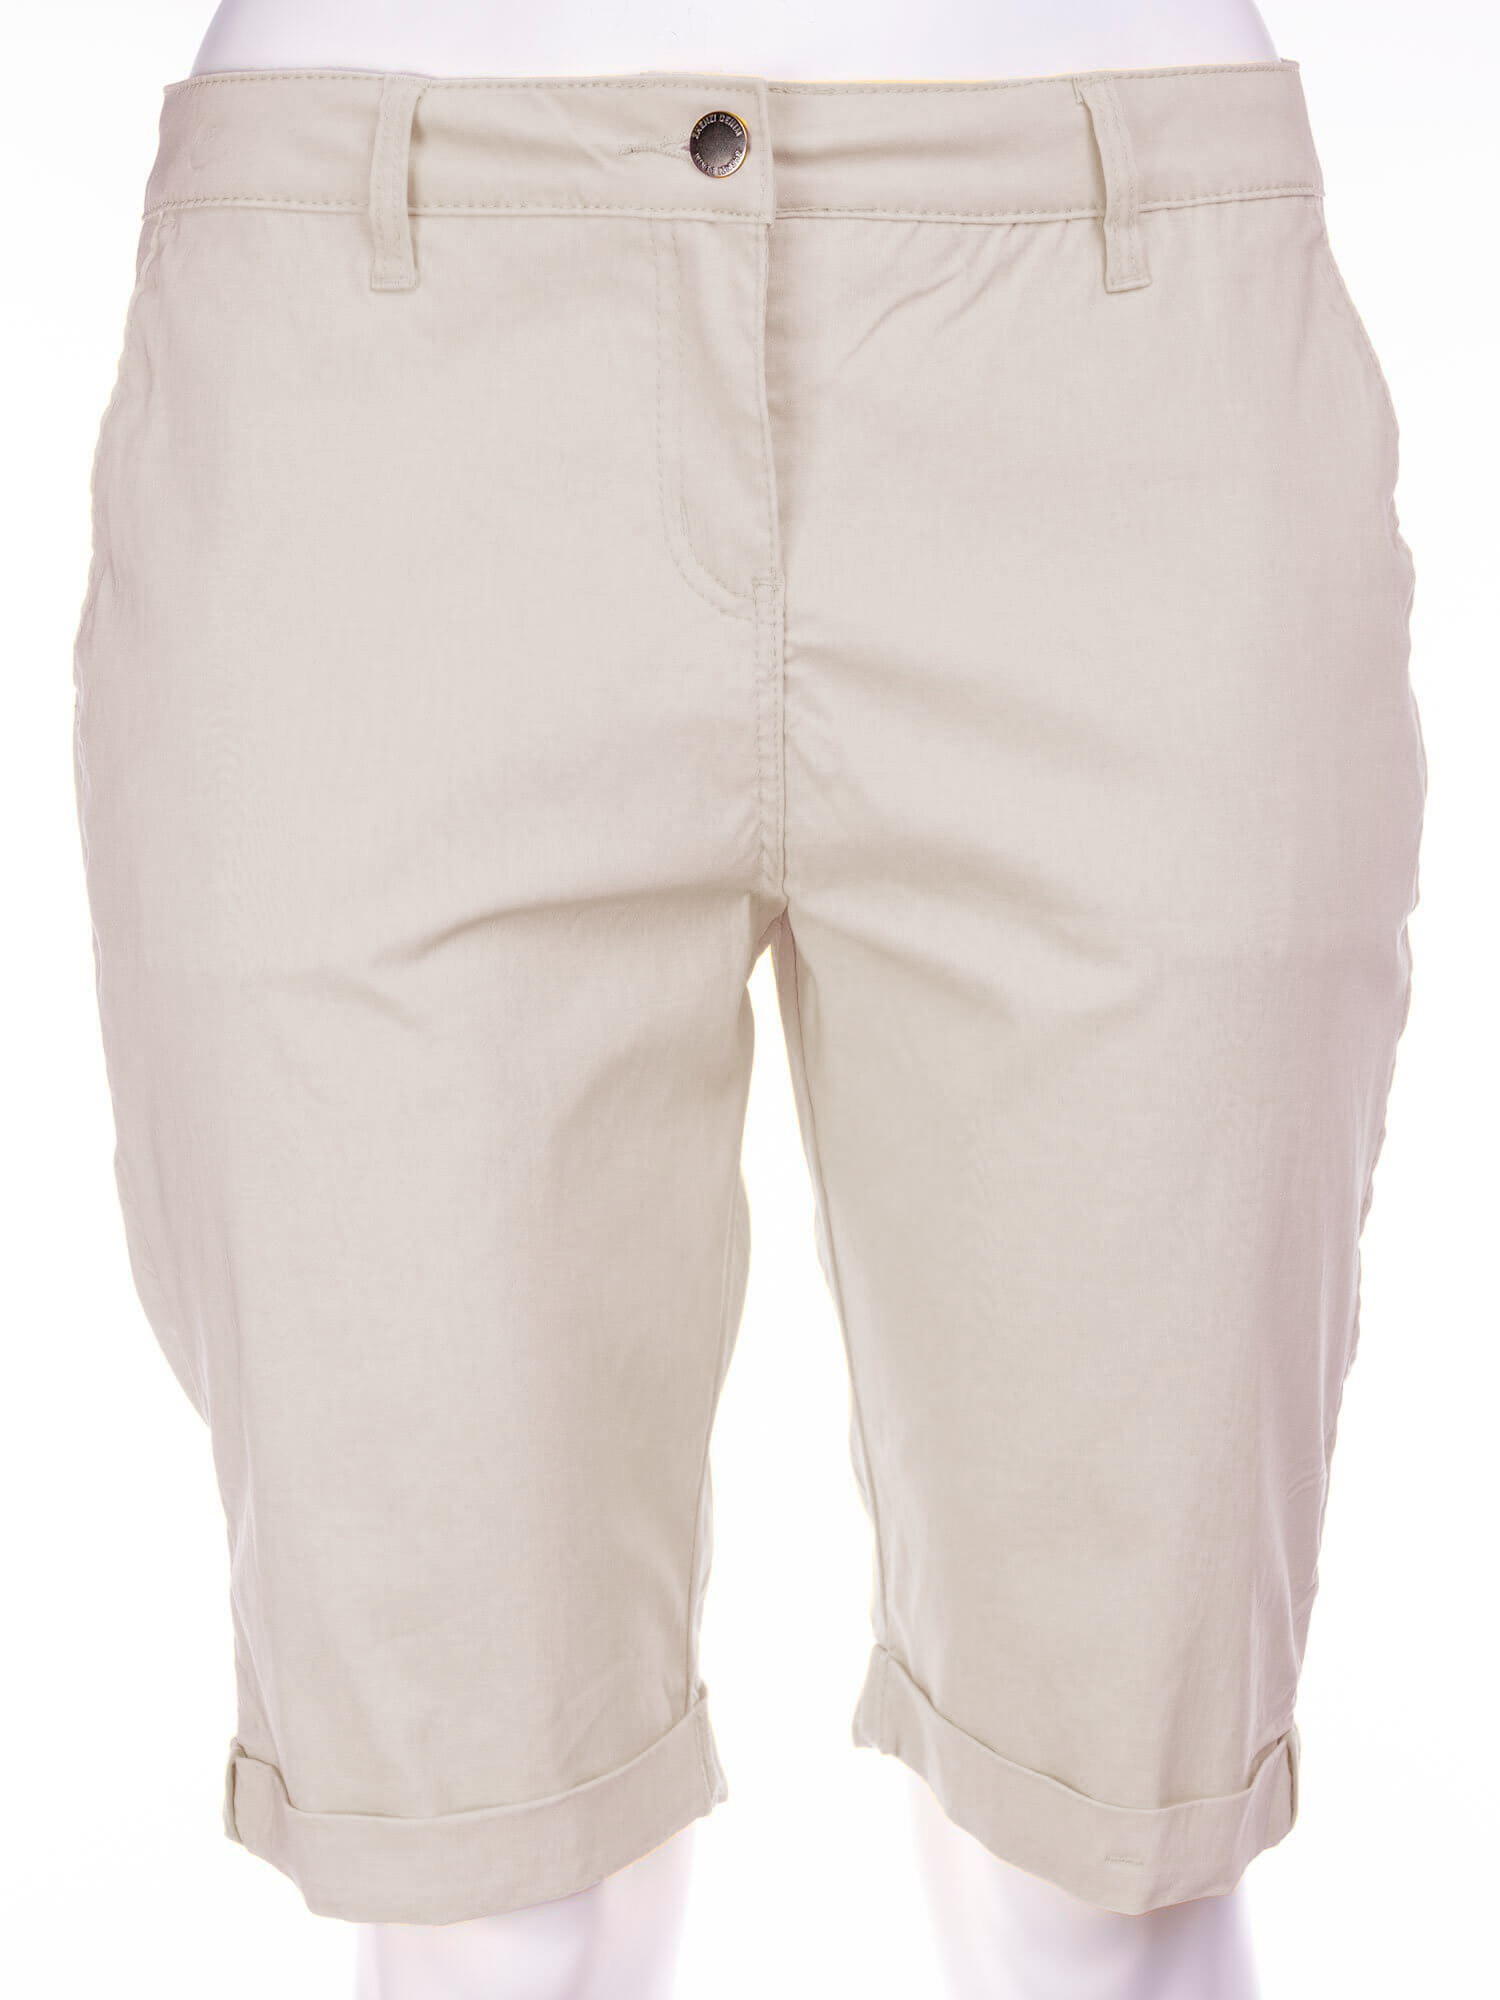 STEP - Sand farvede shorts i bengalin kvalitet fra Zhenzi